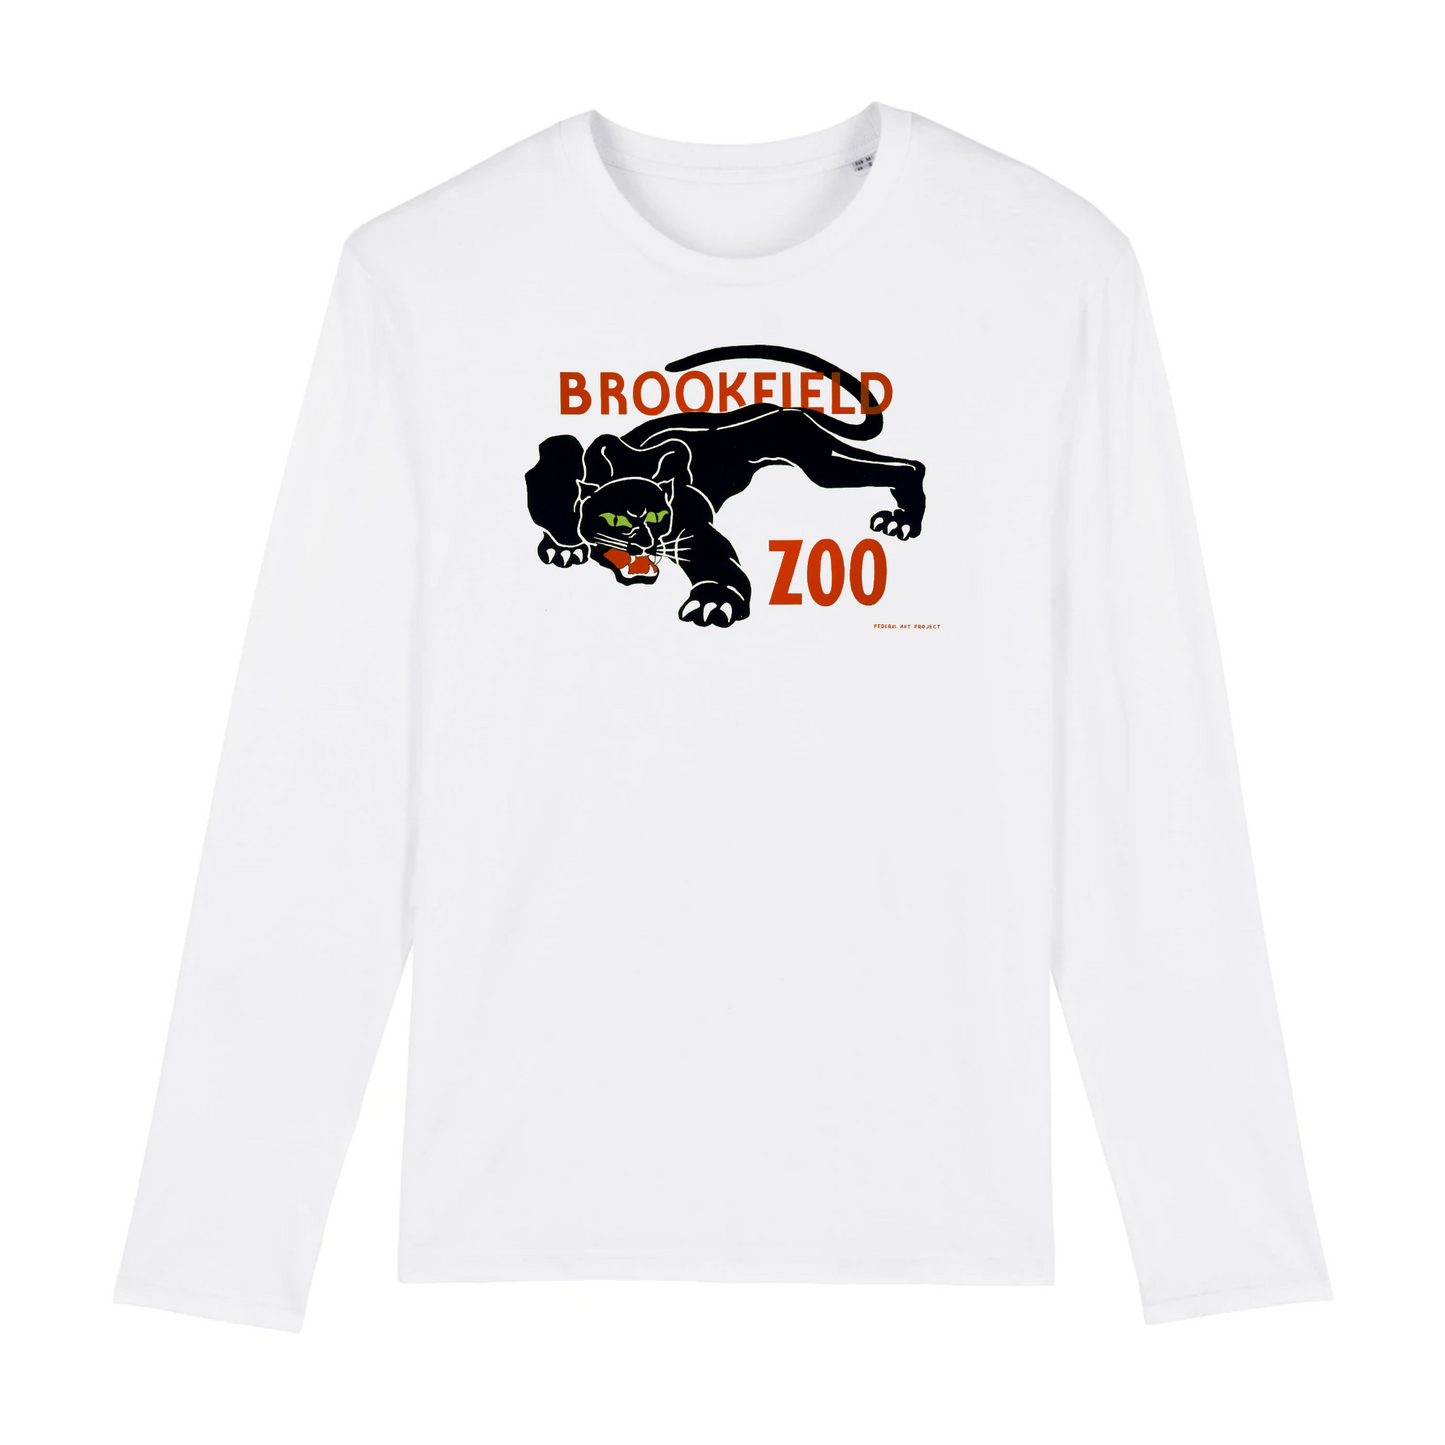 Brookfield Zoo, Chicago, 1936 - Organic Cotton Long-Sleeve T-Shirt